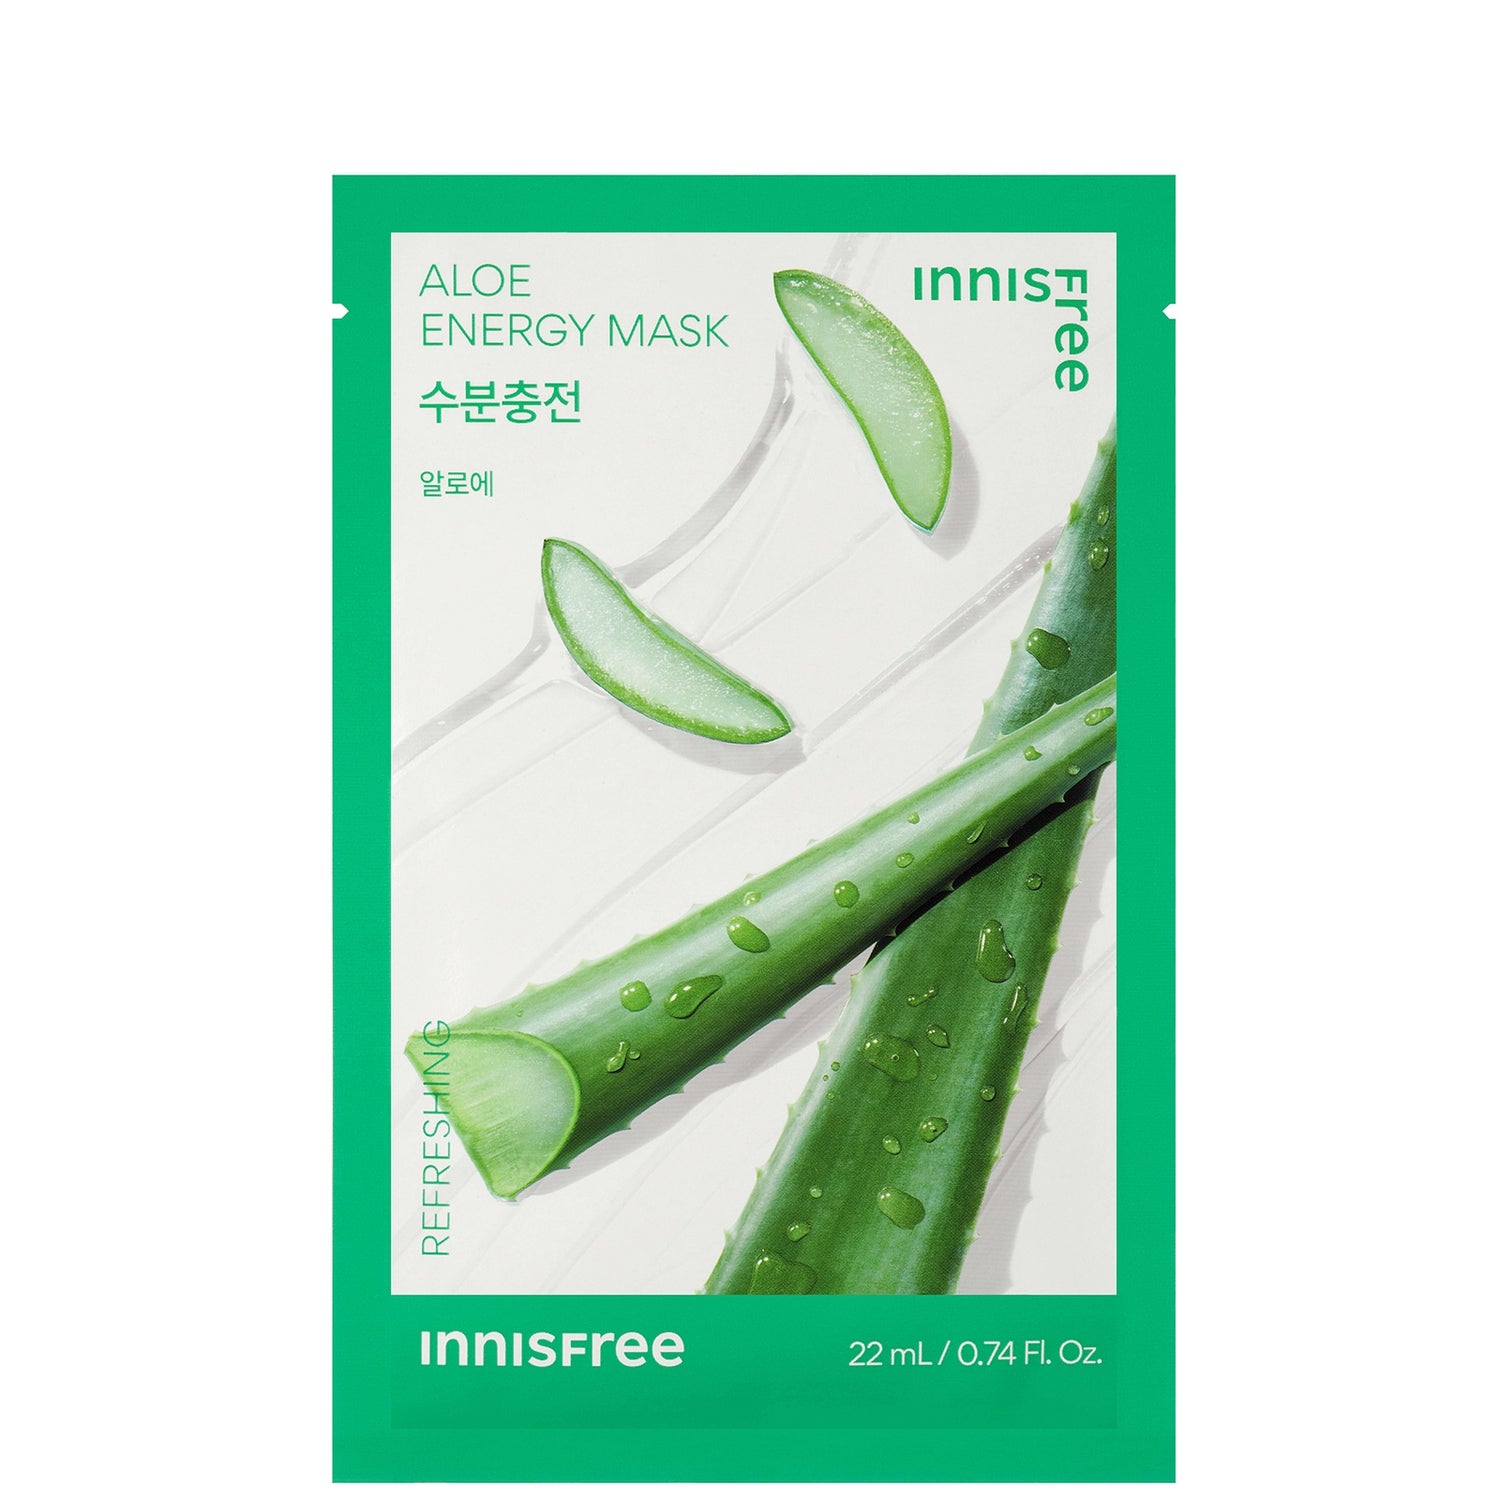 INNISFREE Energy Mask 22ml - Aloe